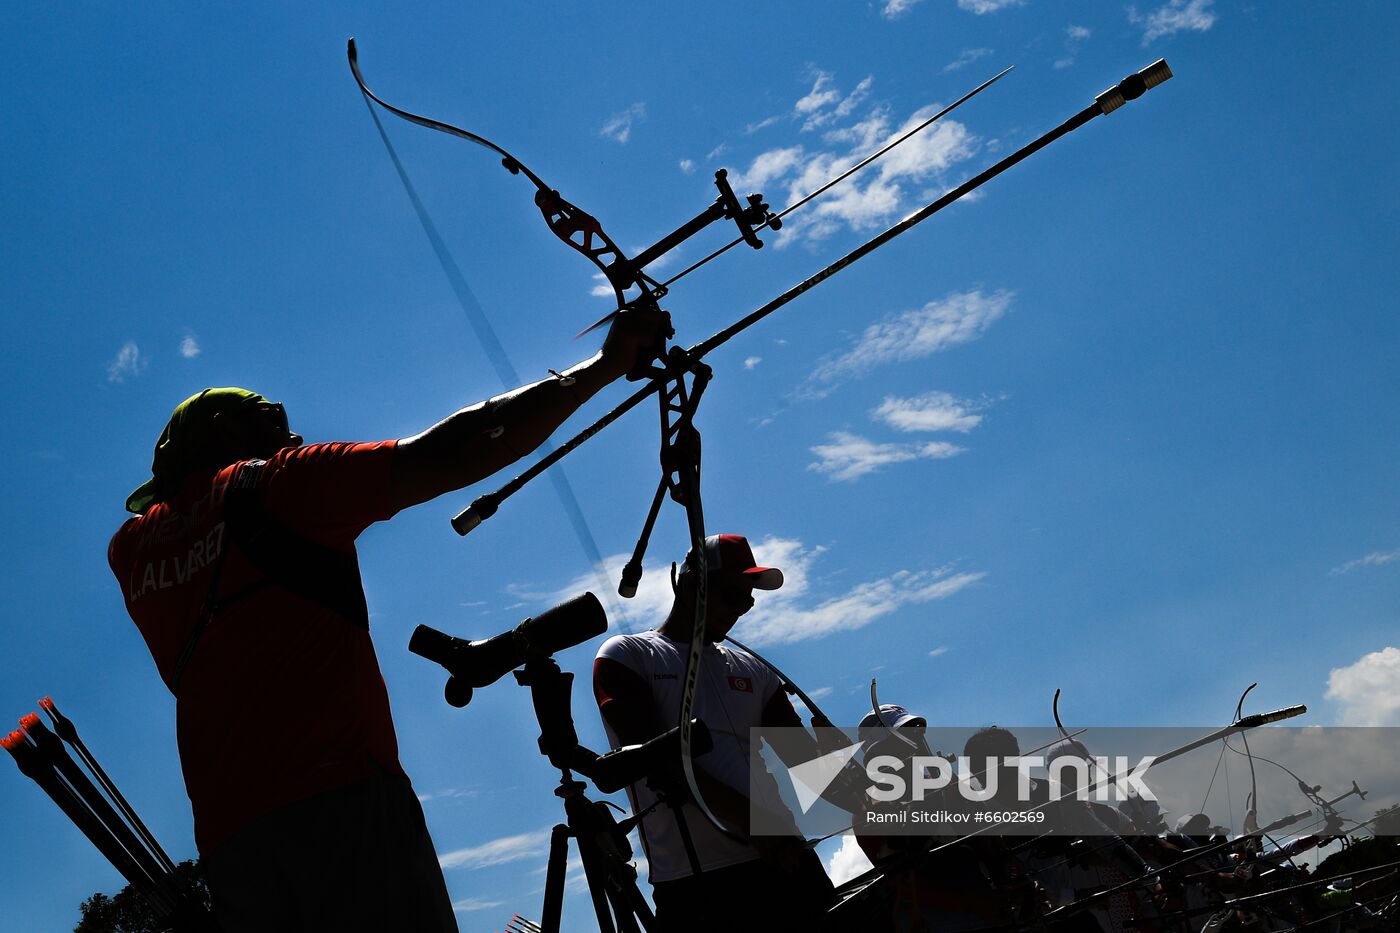 Japan Olympics 2020 Archery